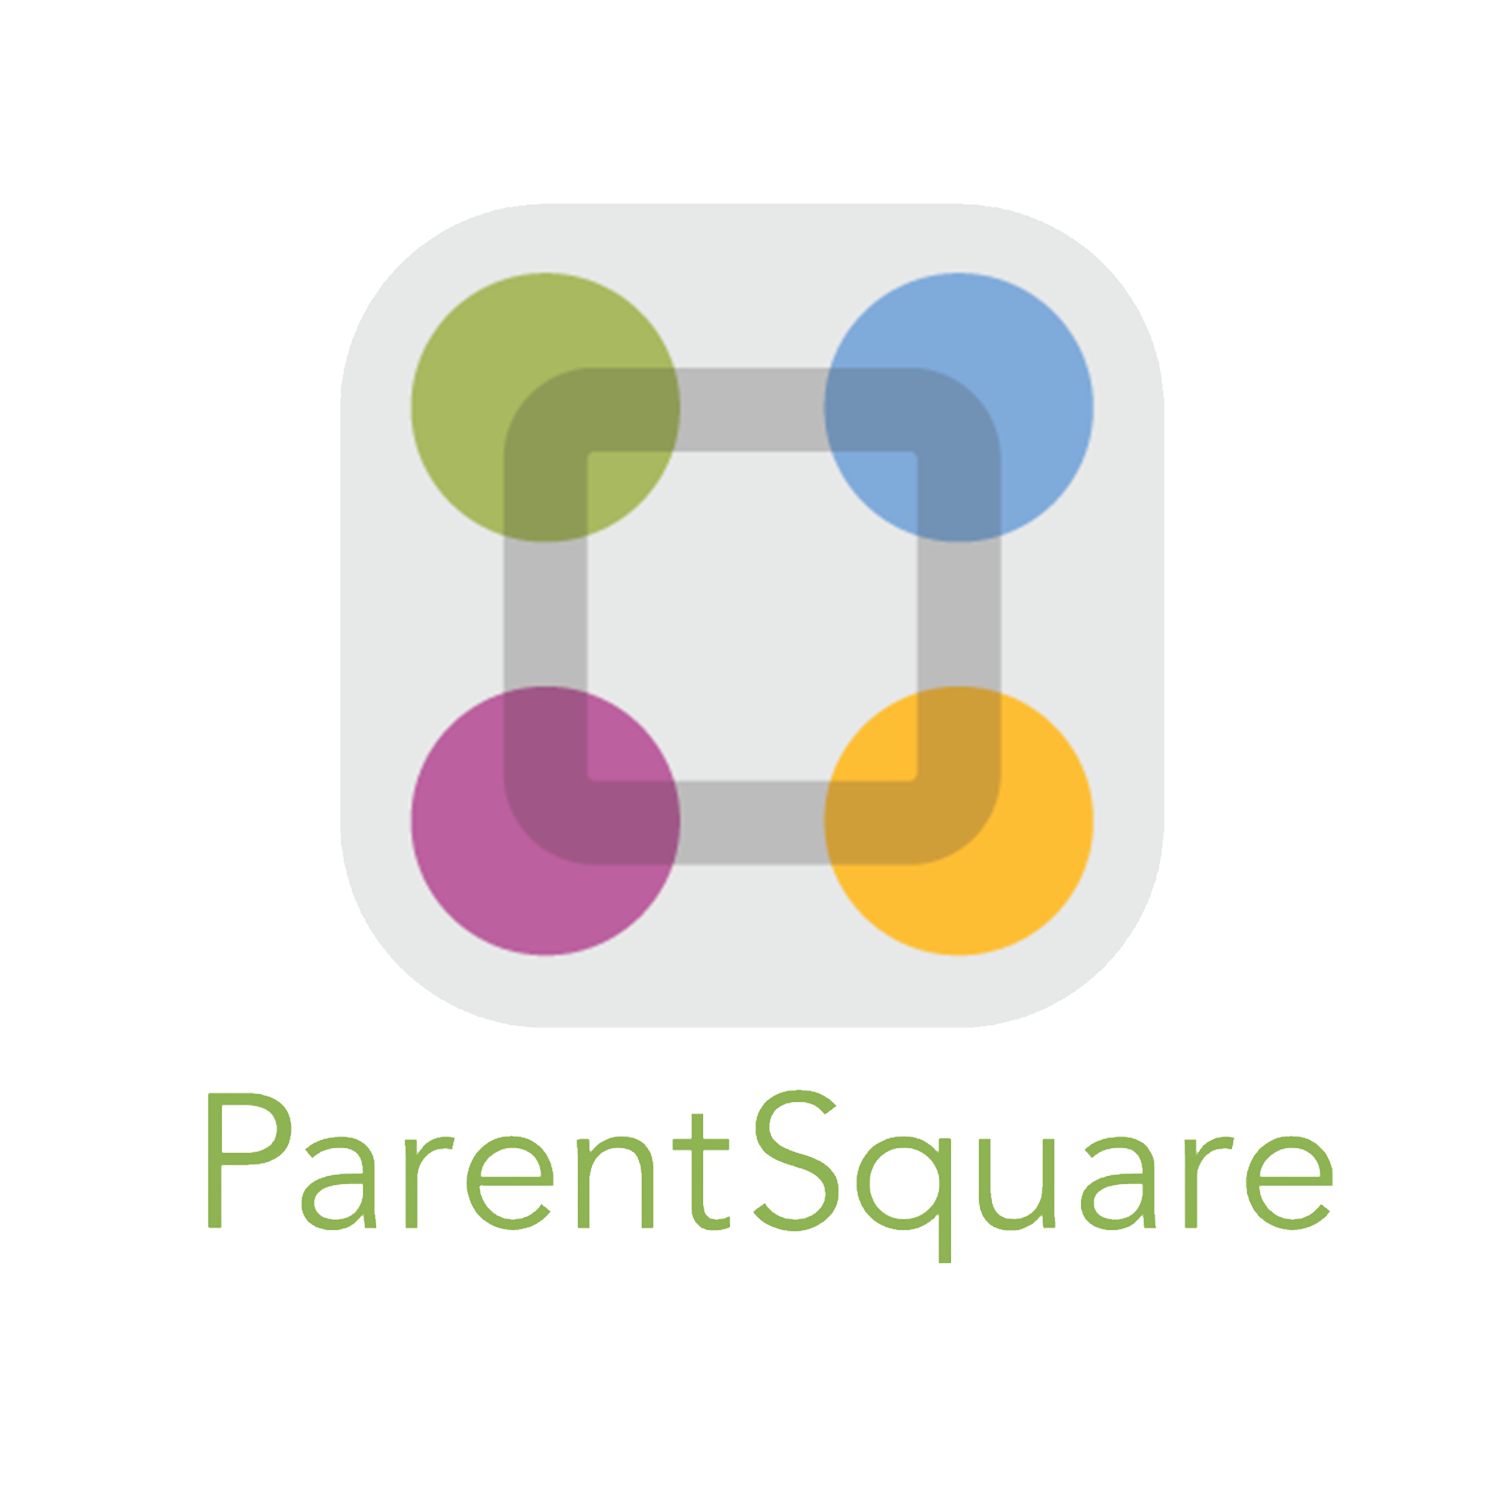 ParentSquare Introduction Video Spanish Image